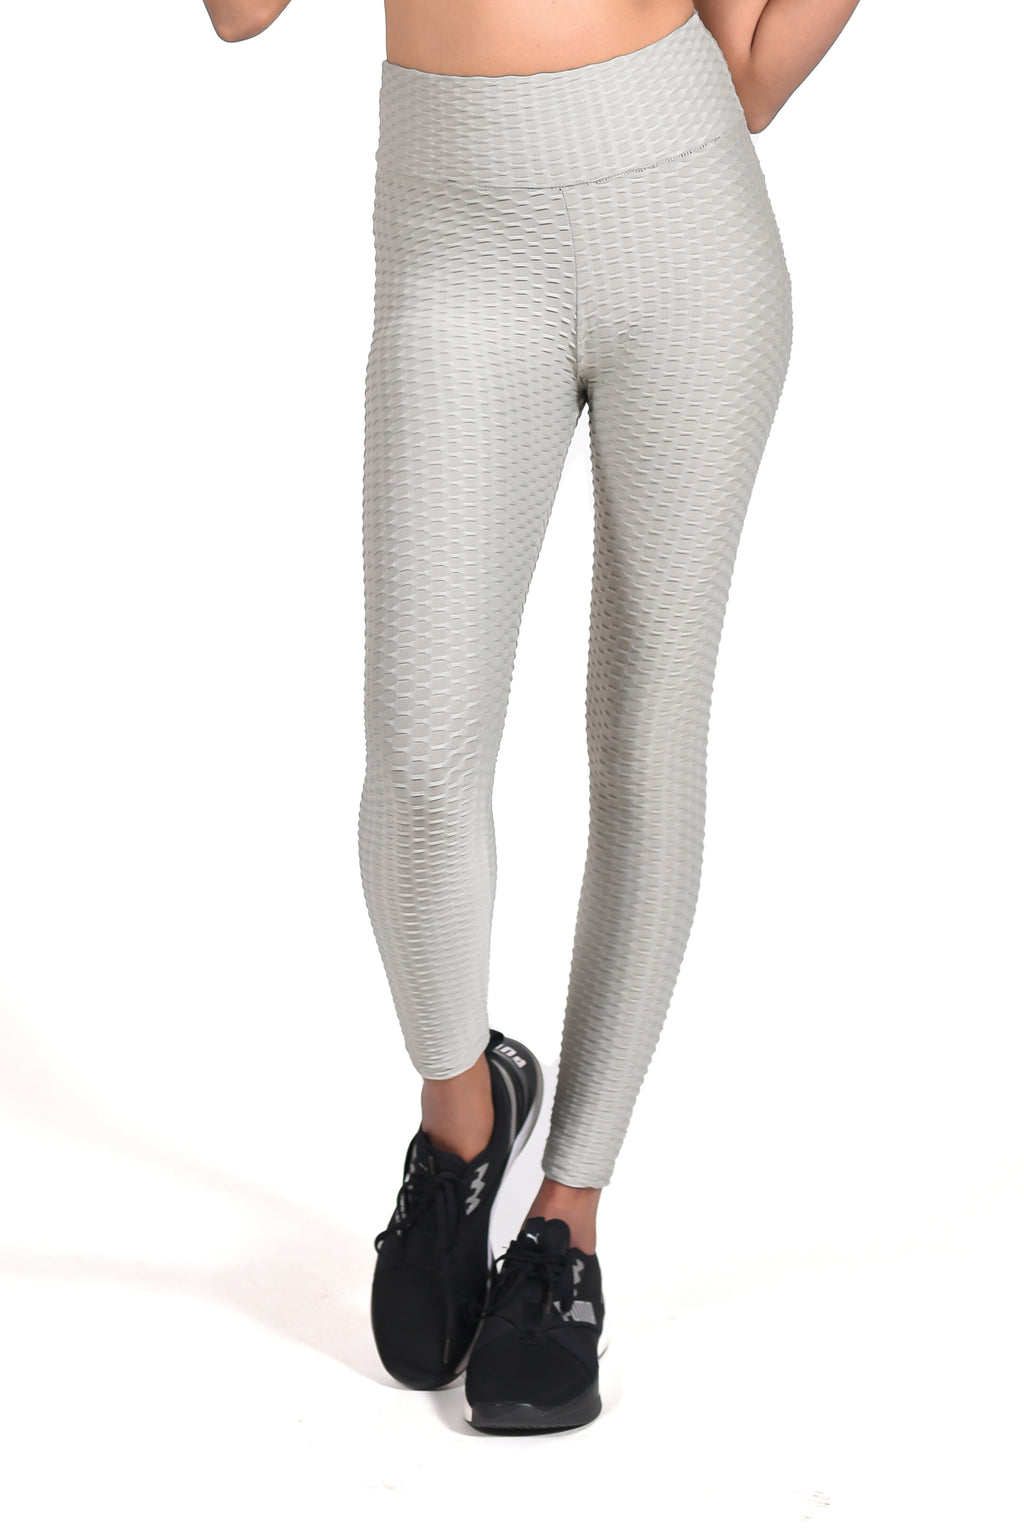 CRYSTALSMOOTH® Anti Cellulite Leggings, Shorts & Tops - MACOM